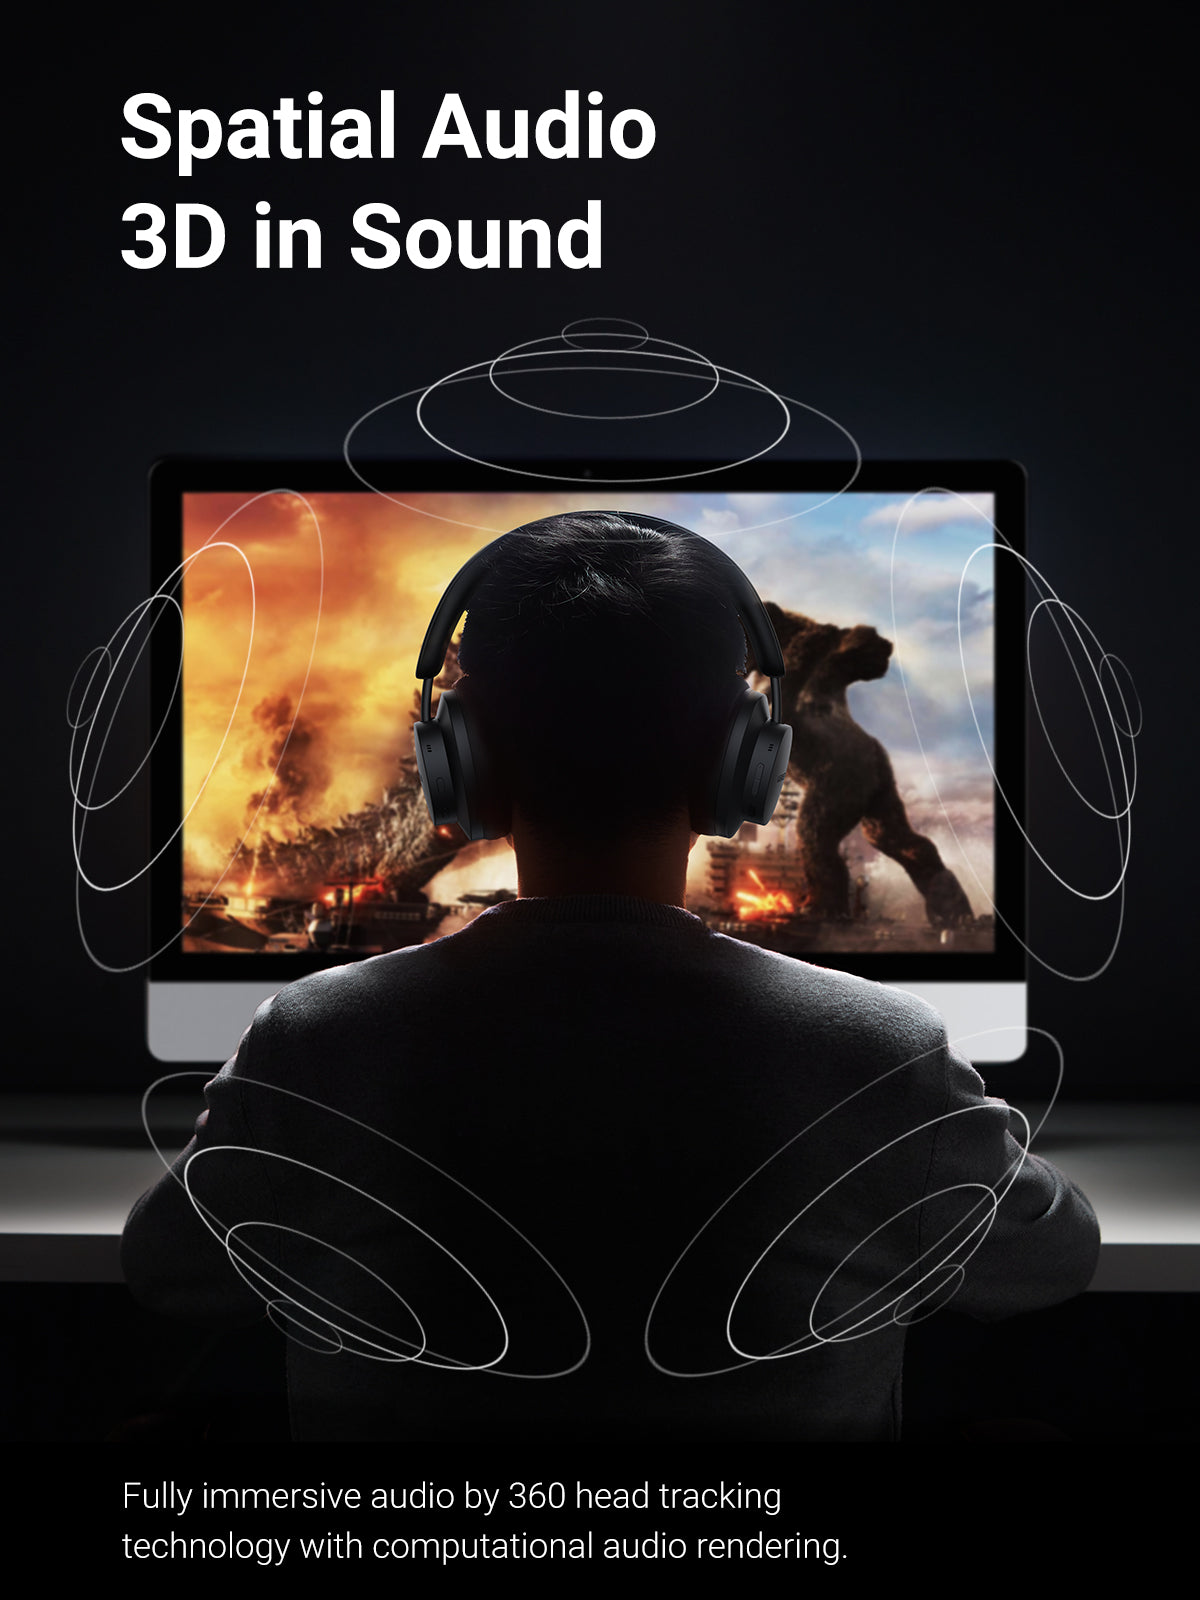 UGREEN HiTune Max3 Hybrid Active Noise-Cancelling Headphones (Black) - PH